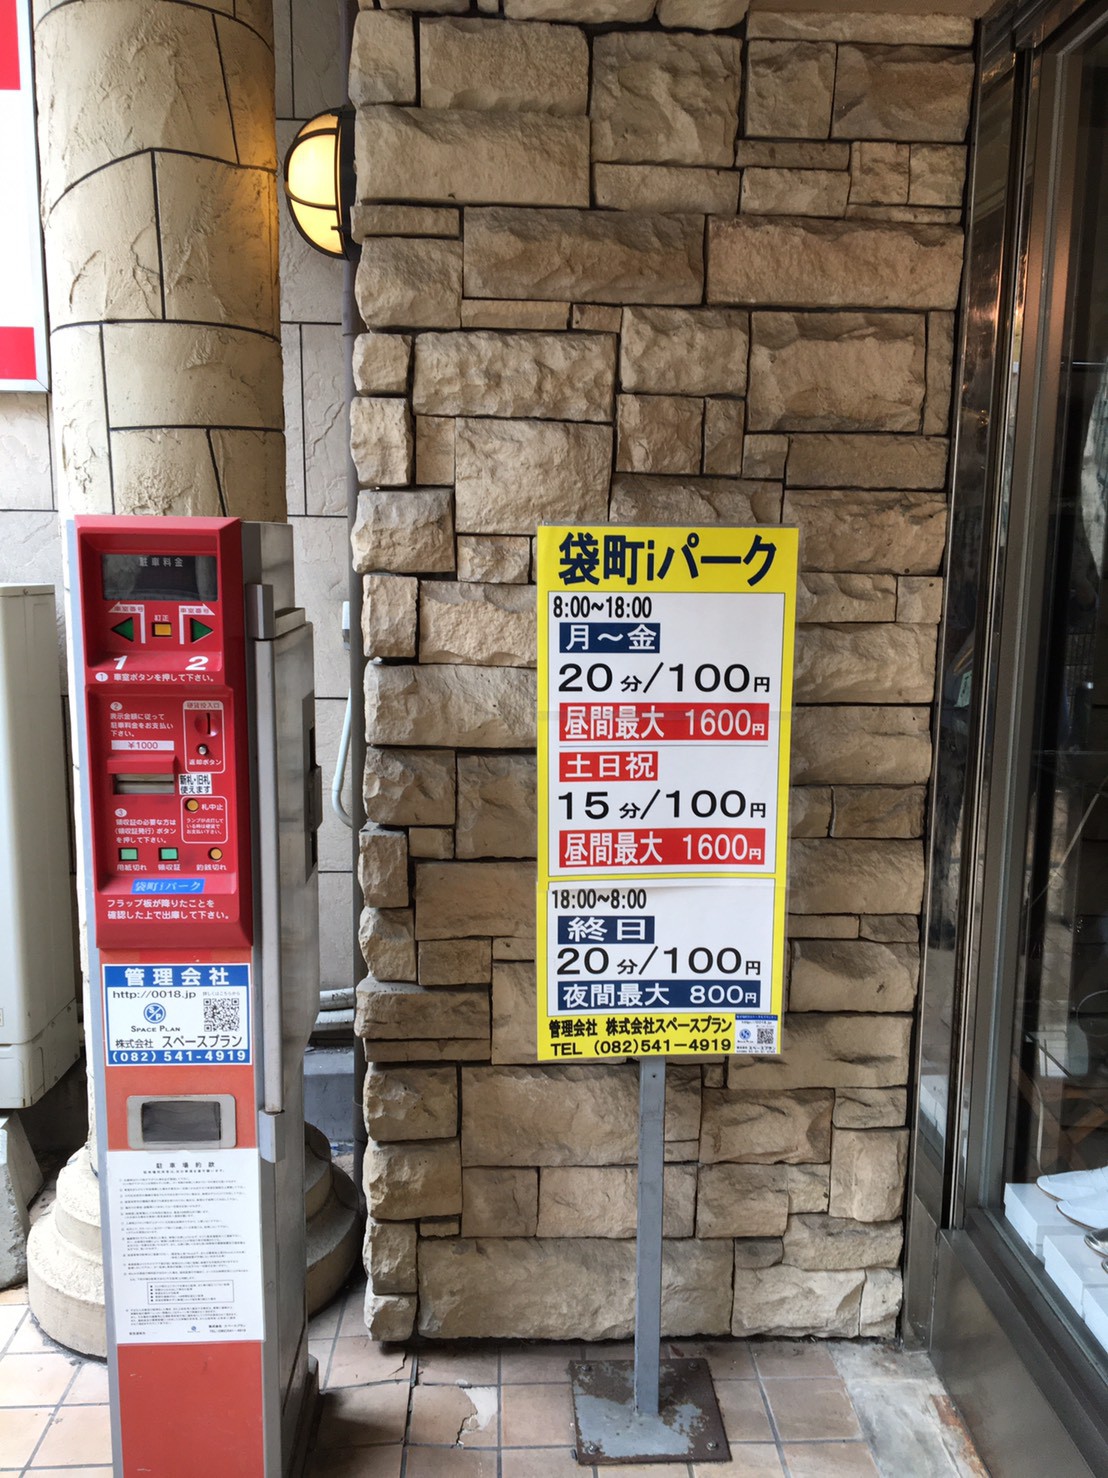 30 Sec Hondori Hiroshima Shopping Arcade # 702